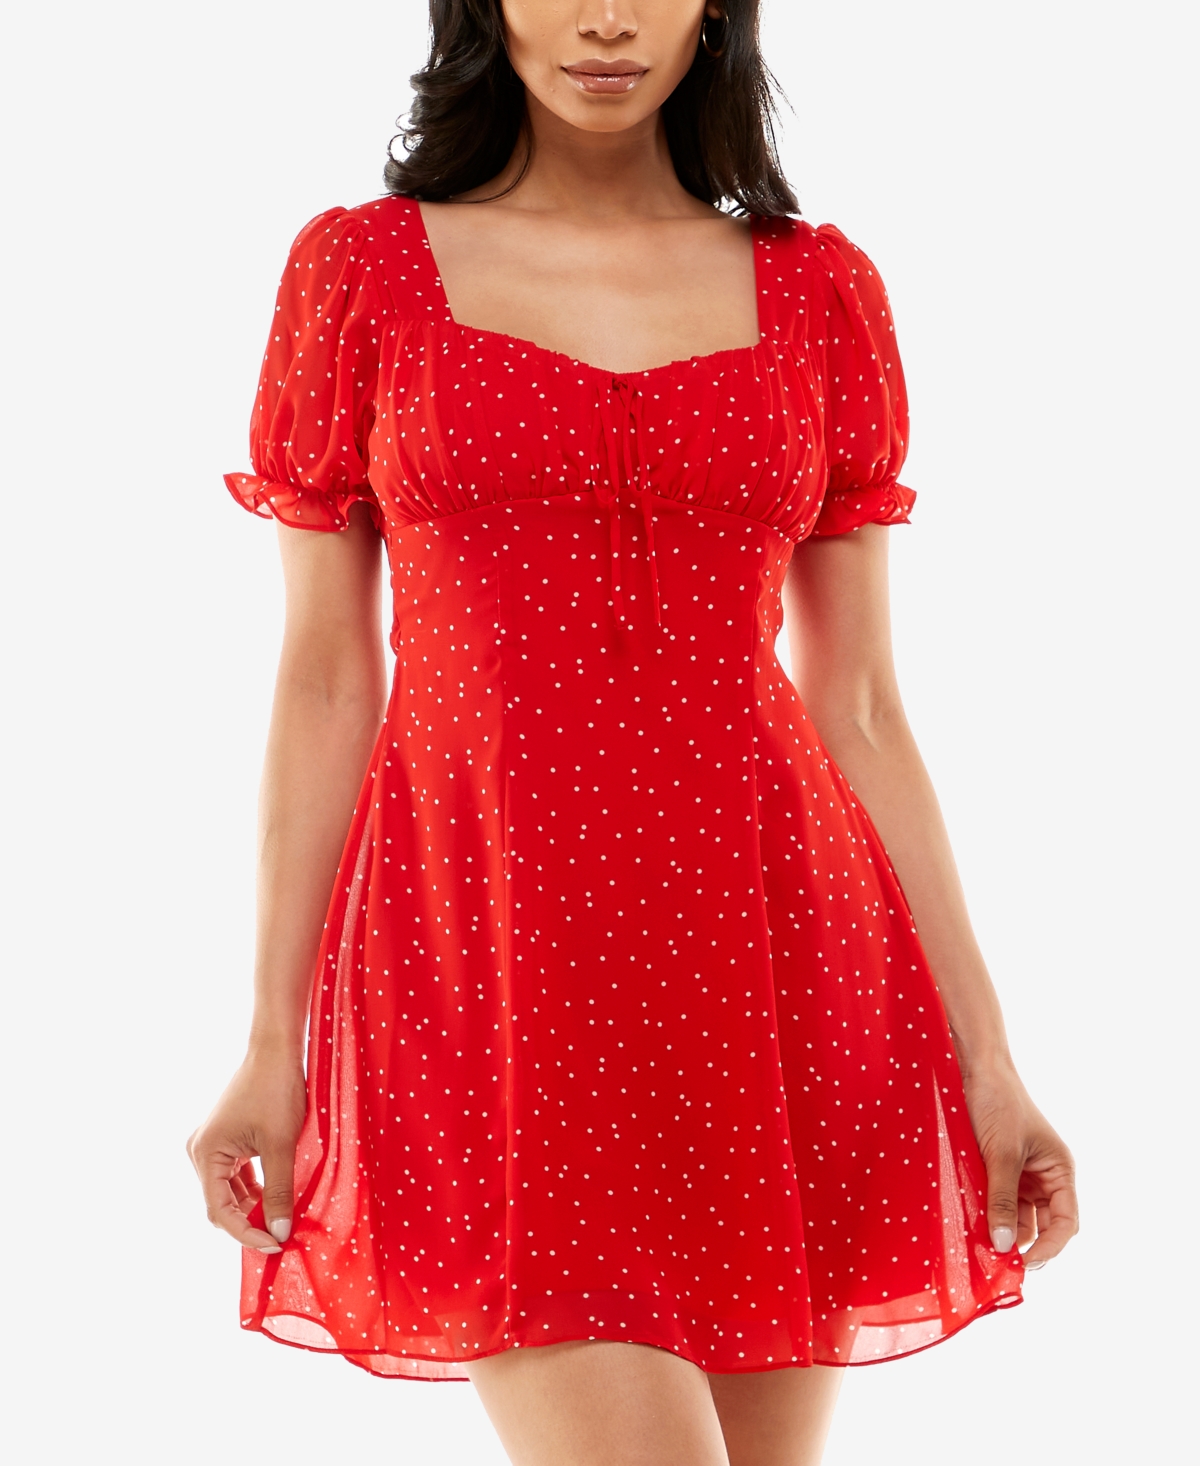 Juniors' Dot-Print Dress - Red Polka Dot